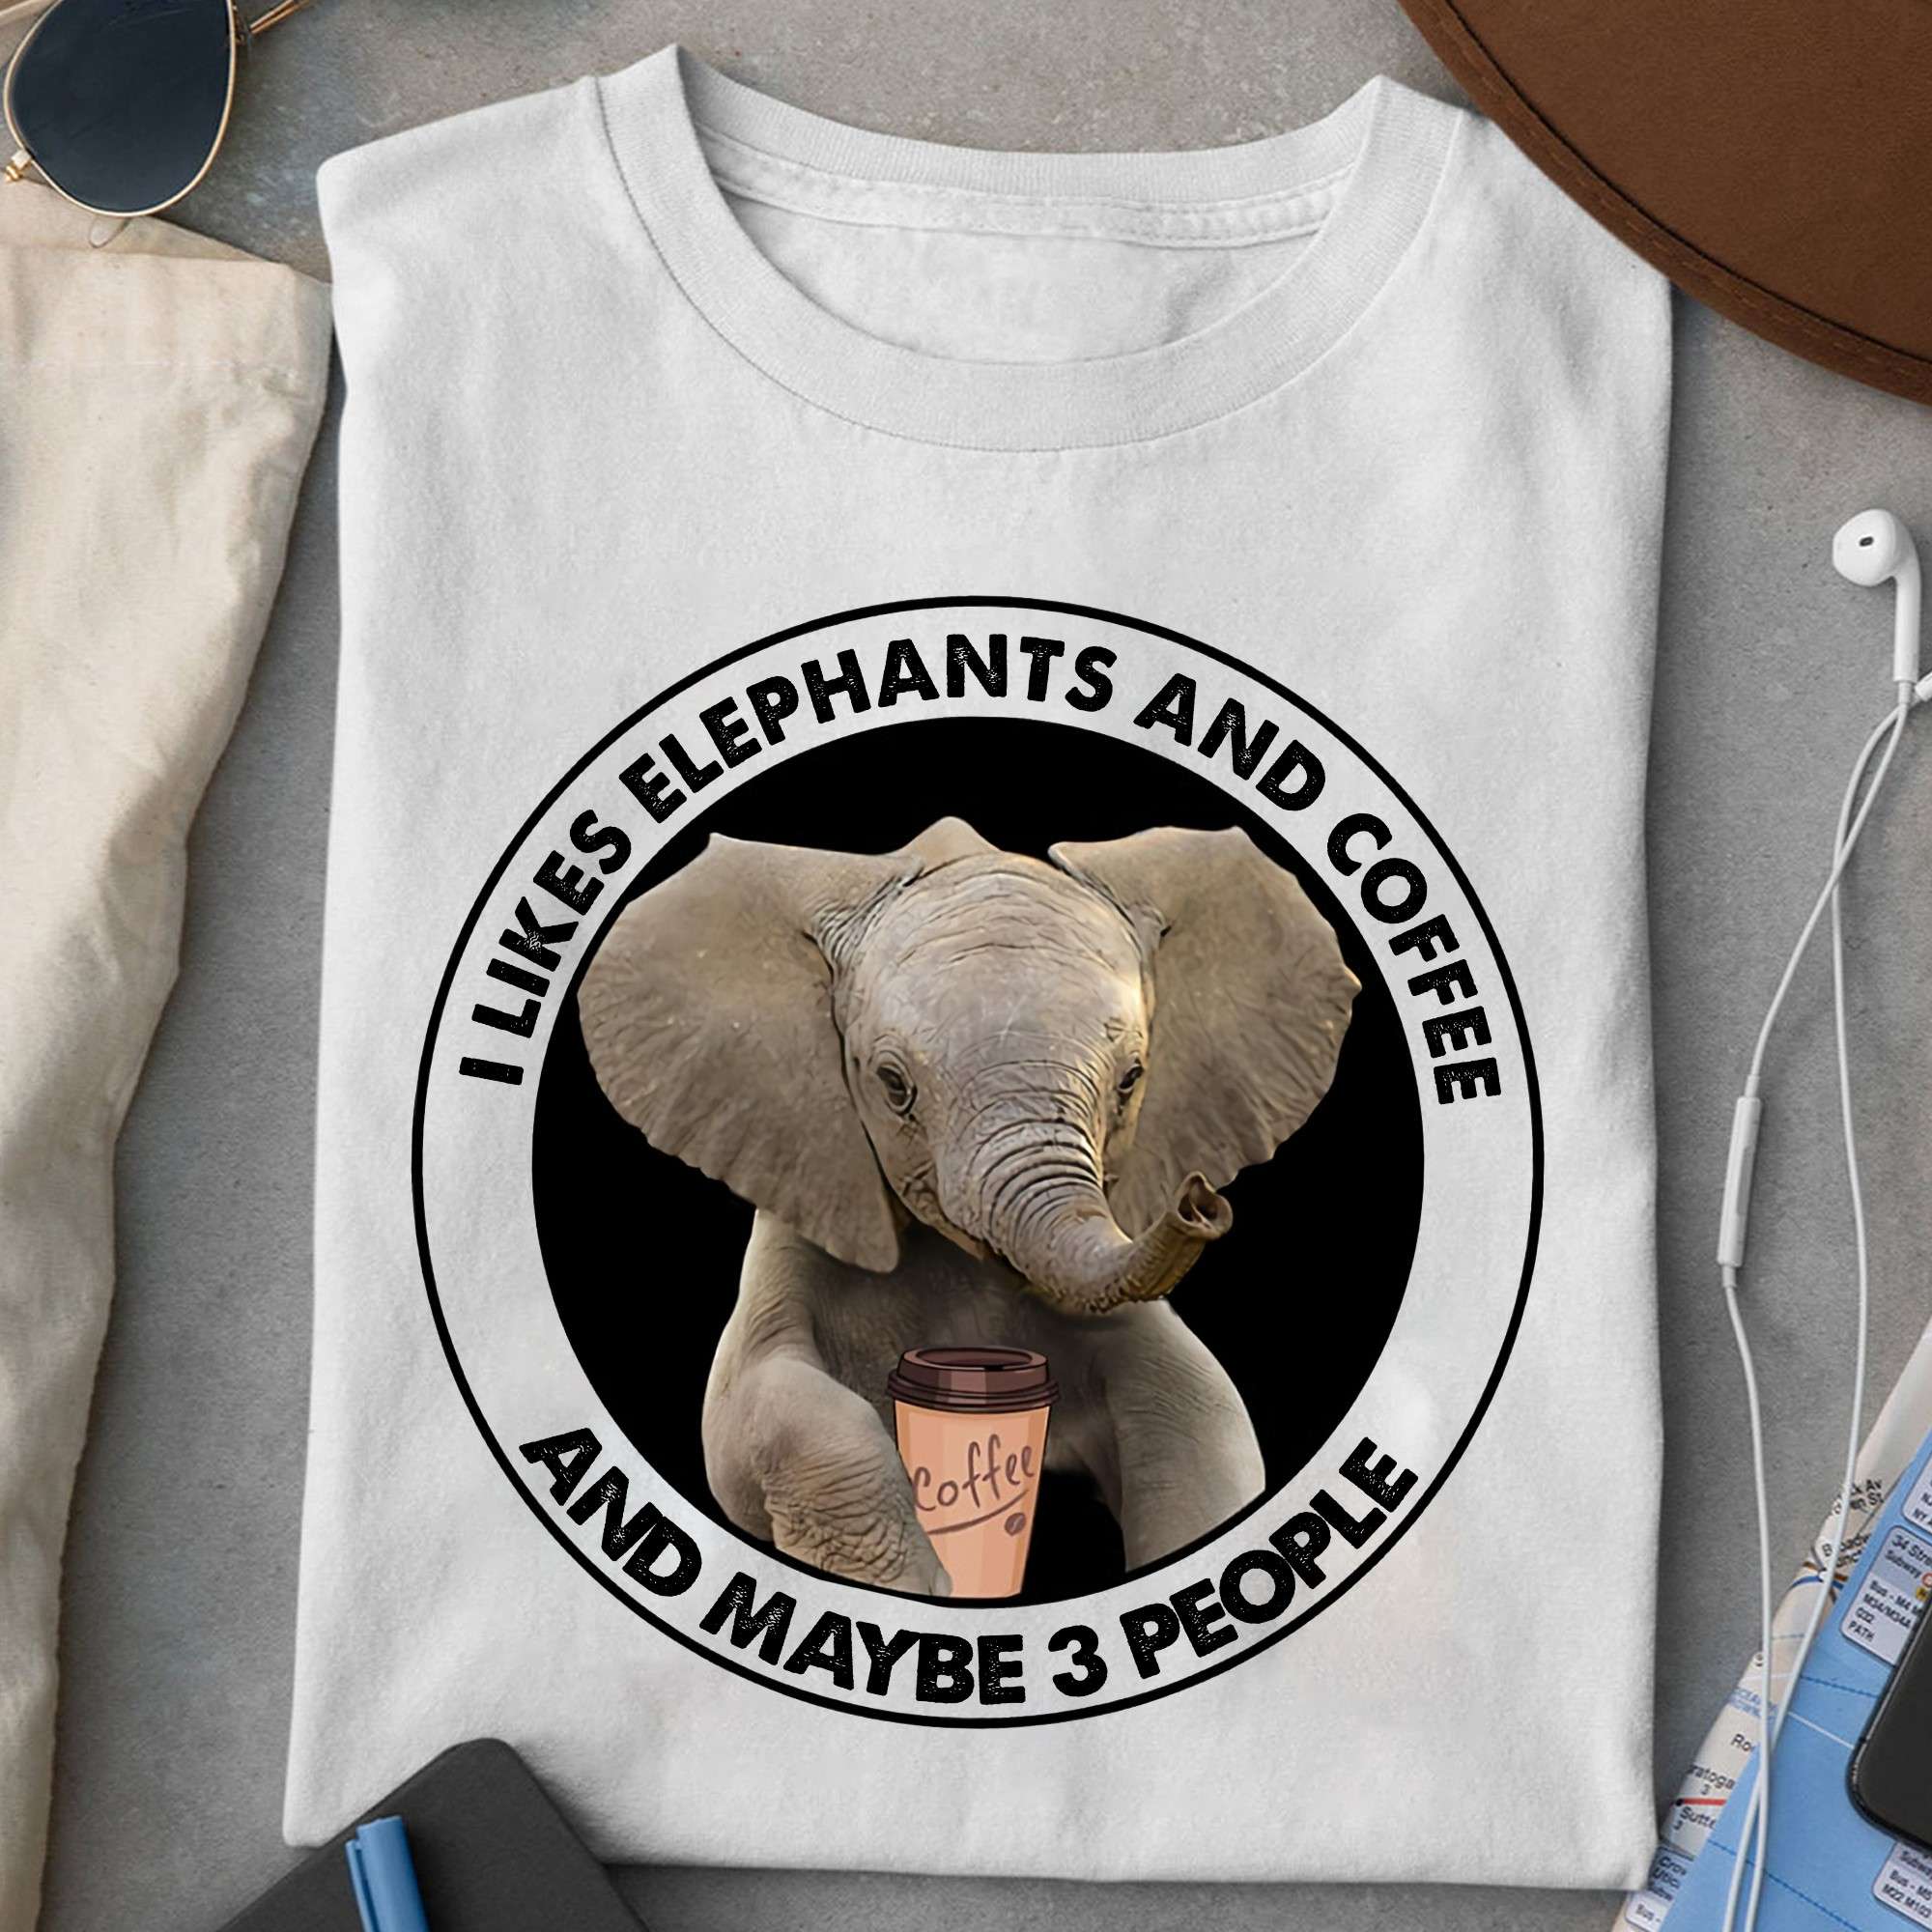 I like eplephants and coffee and maybe 3 people - Coffee addiction, elephant gorgeous animal